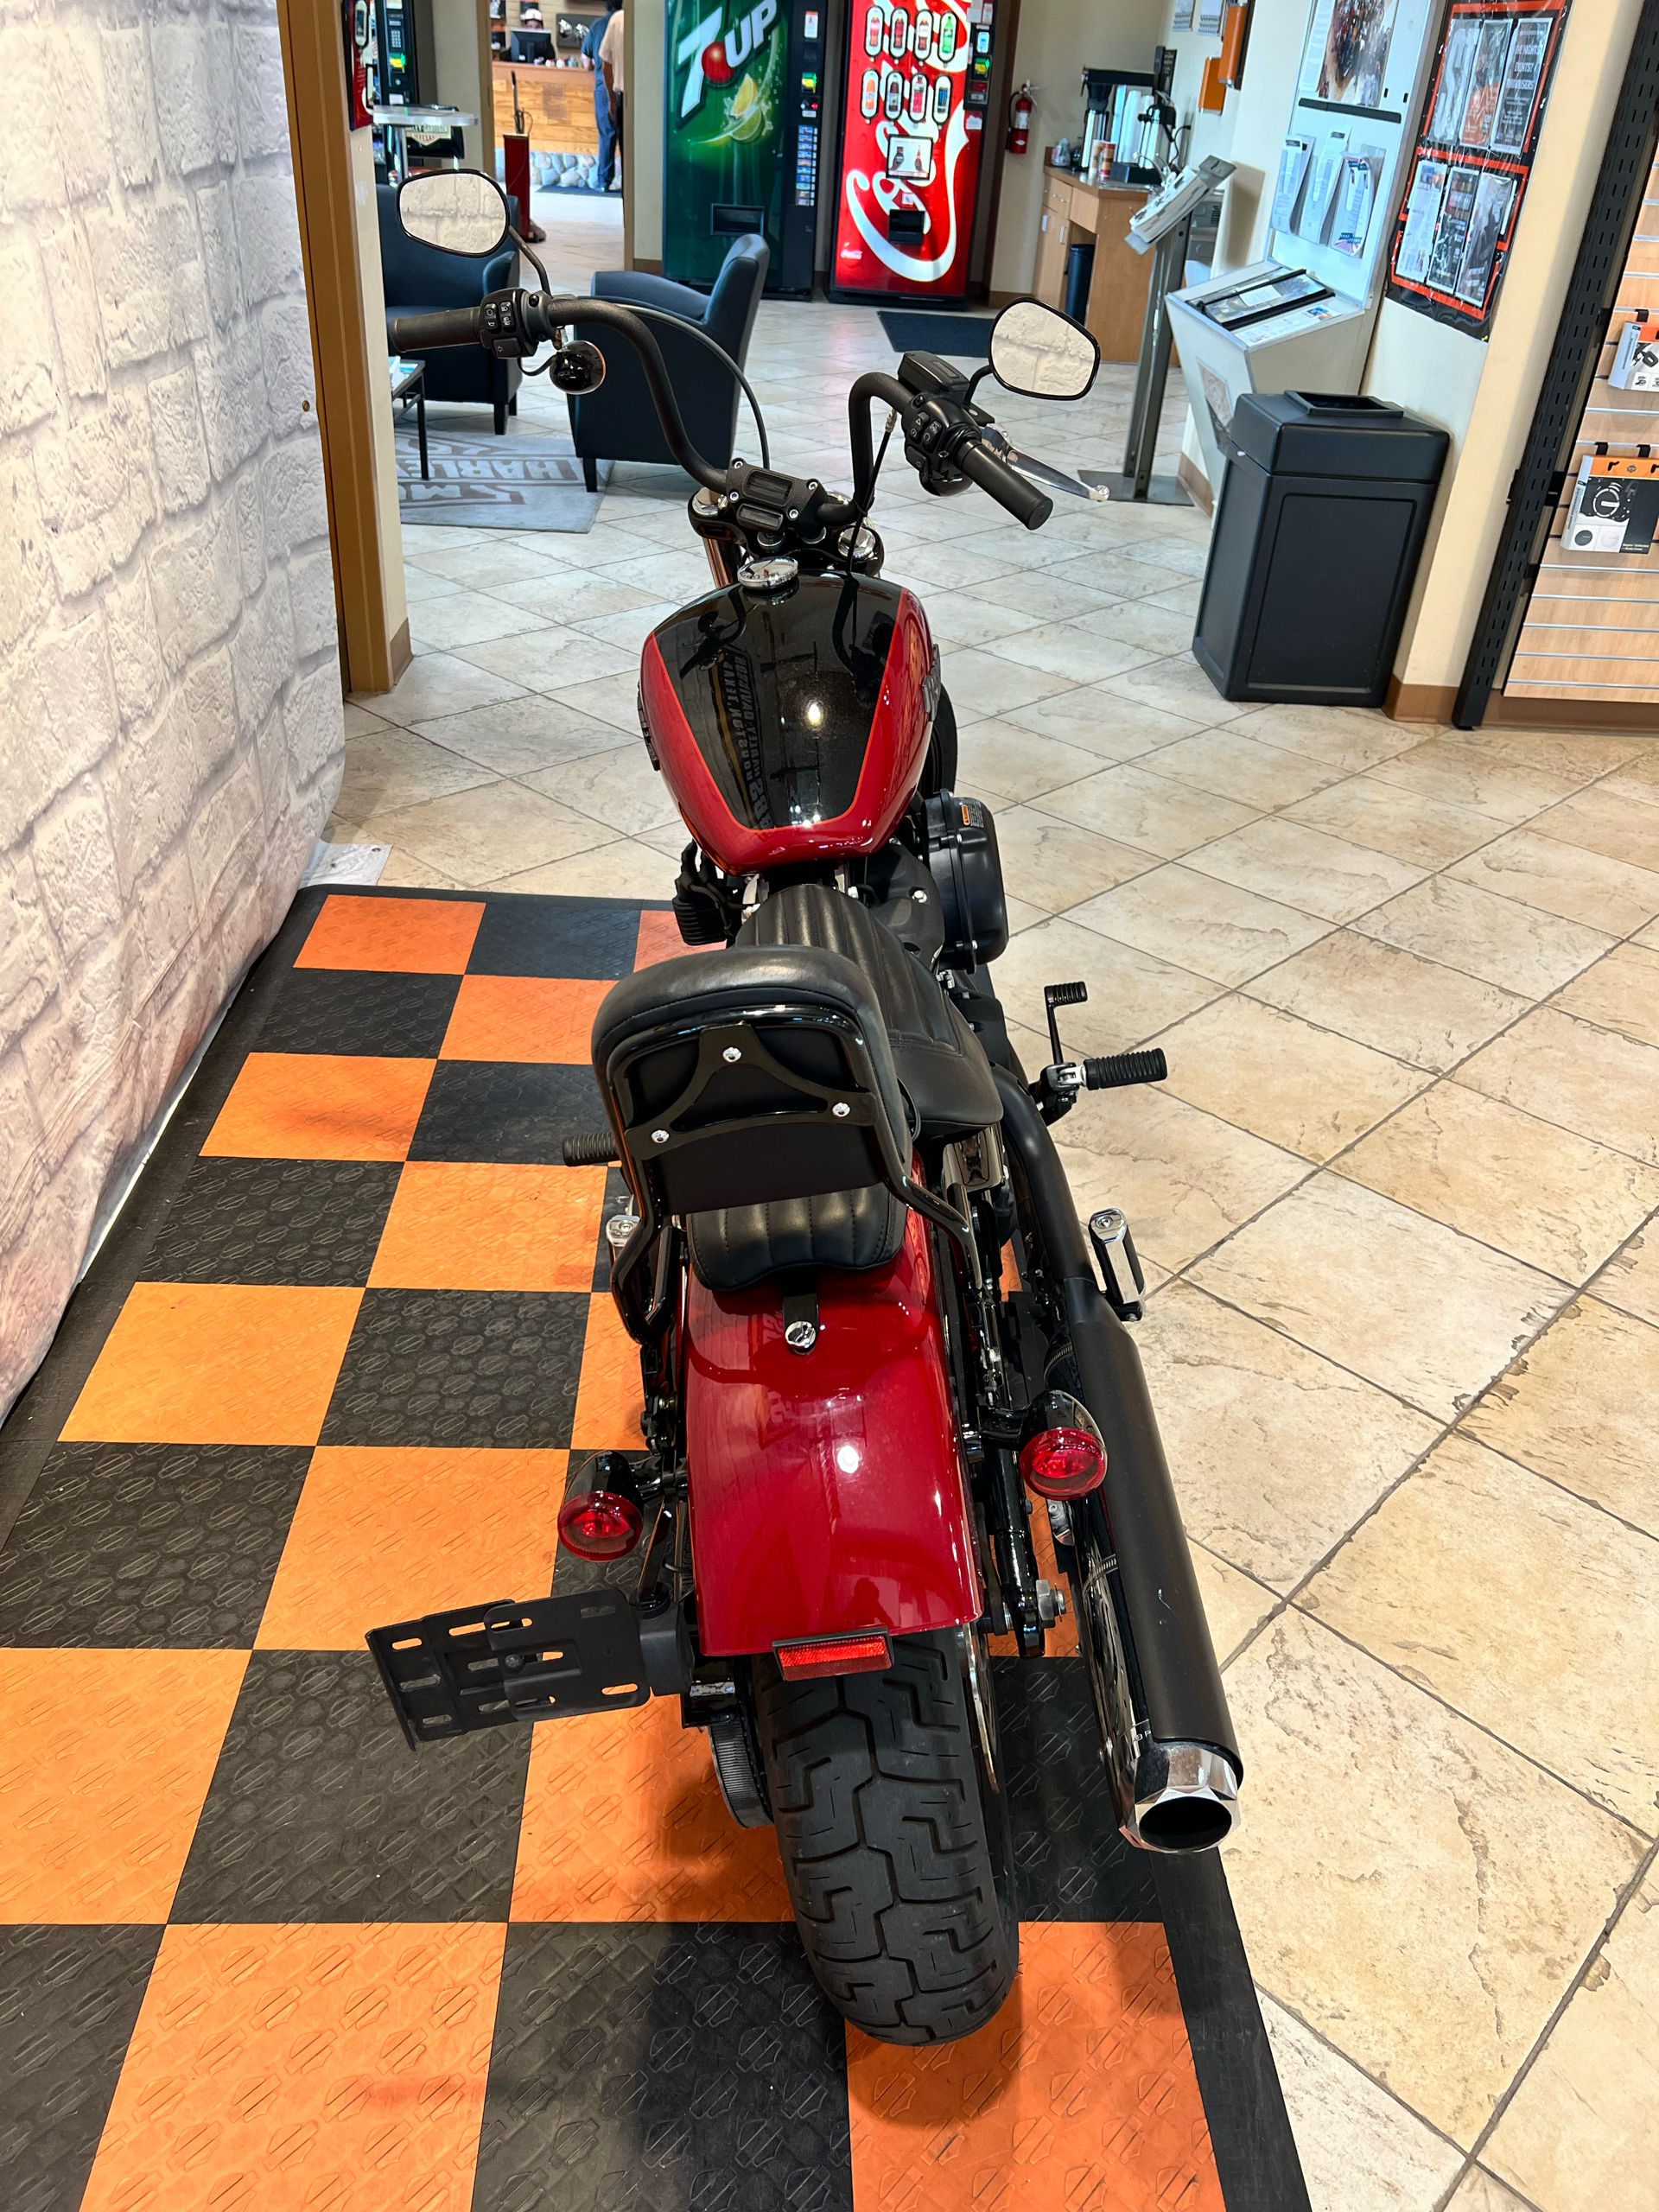 2020 Harley-Davidson Street Bob® in Houston, Texas - Photo 3